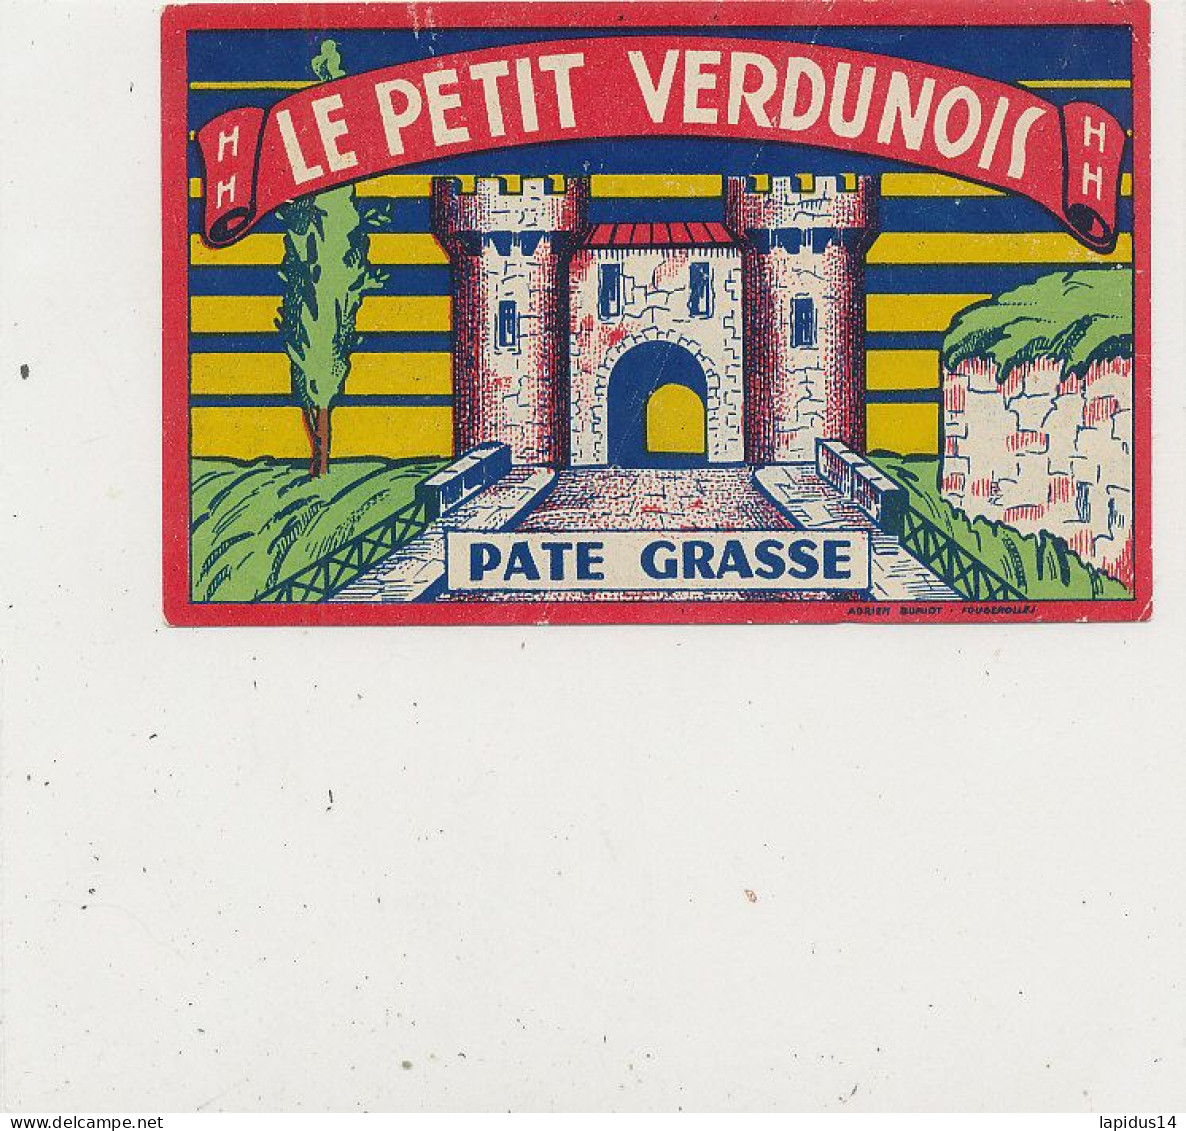 GG 444  / ETIQUETTE FROMAGE  PATE GRASSE  LE PETIT VERDUNOIS - Fromage